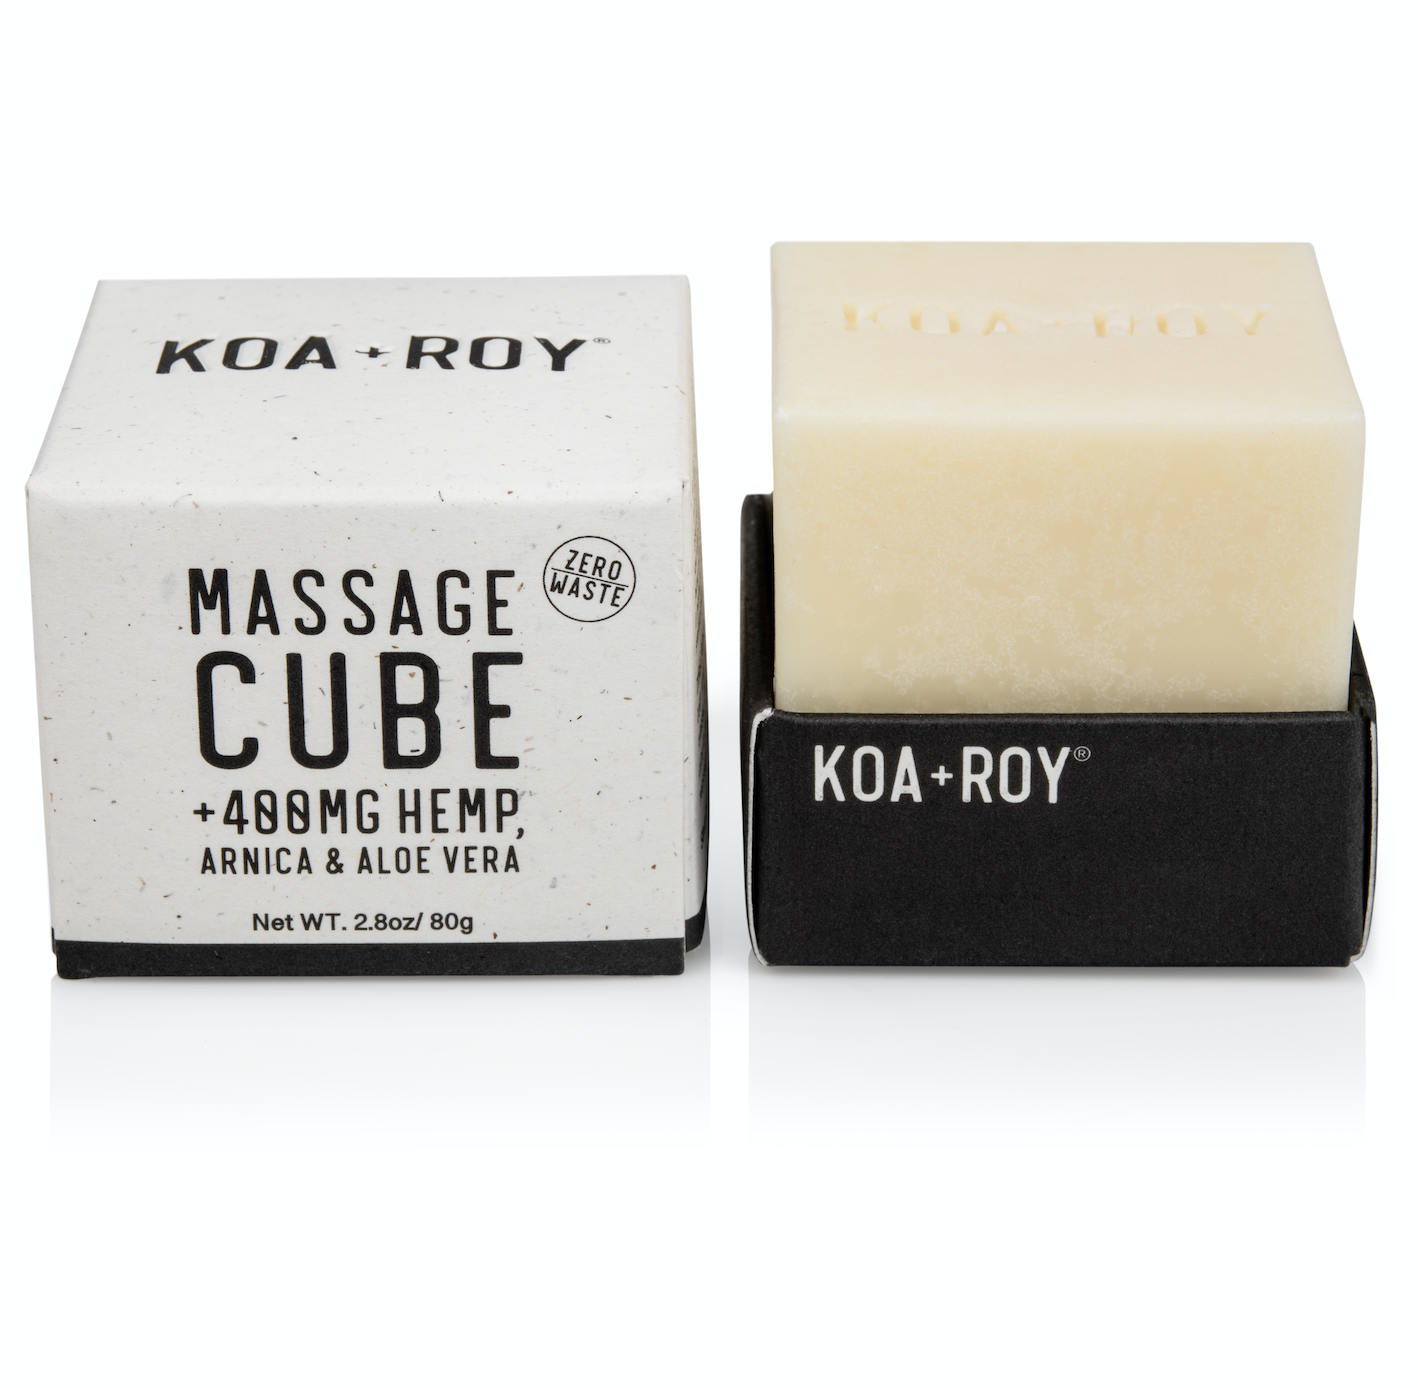 Massage Cube + CBD Arnica & Aloe Vera Massage tool CBD delivery tool